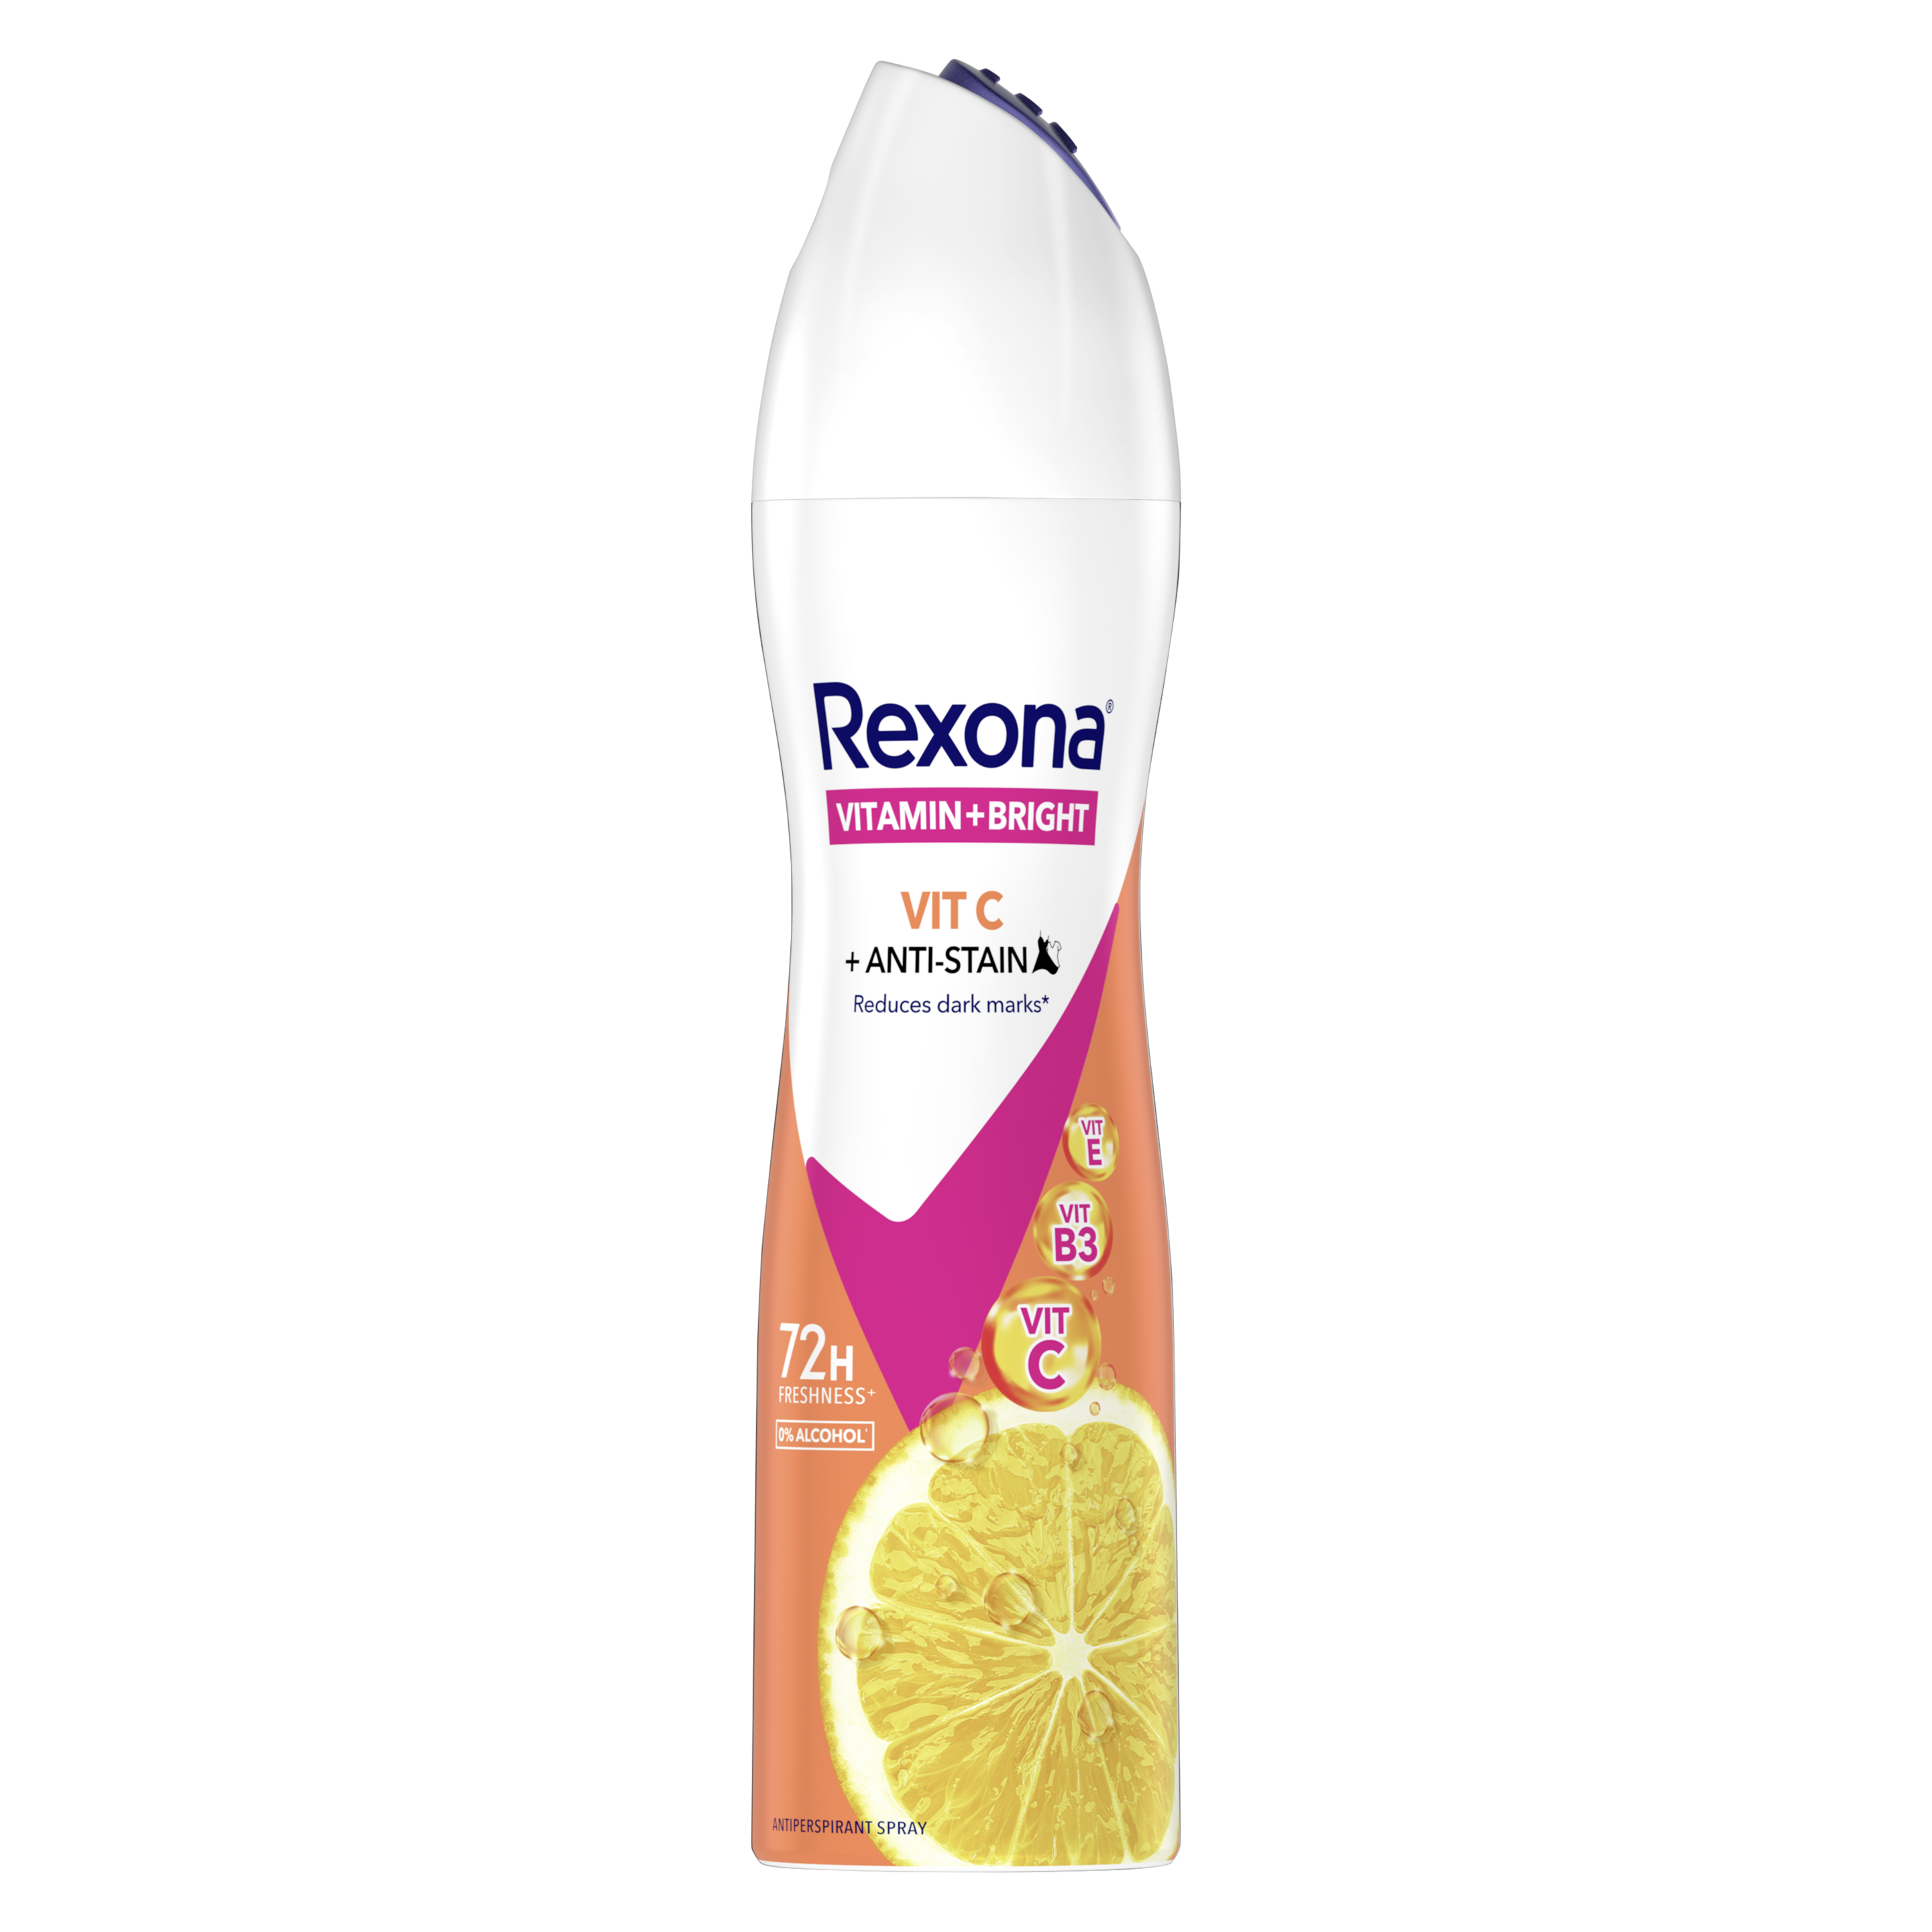 Rexona Vitamin+Bright Vitamin C + Anti-Stain Spray